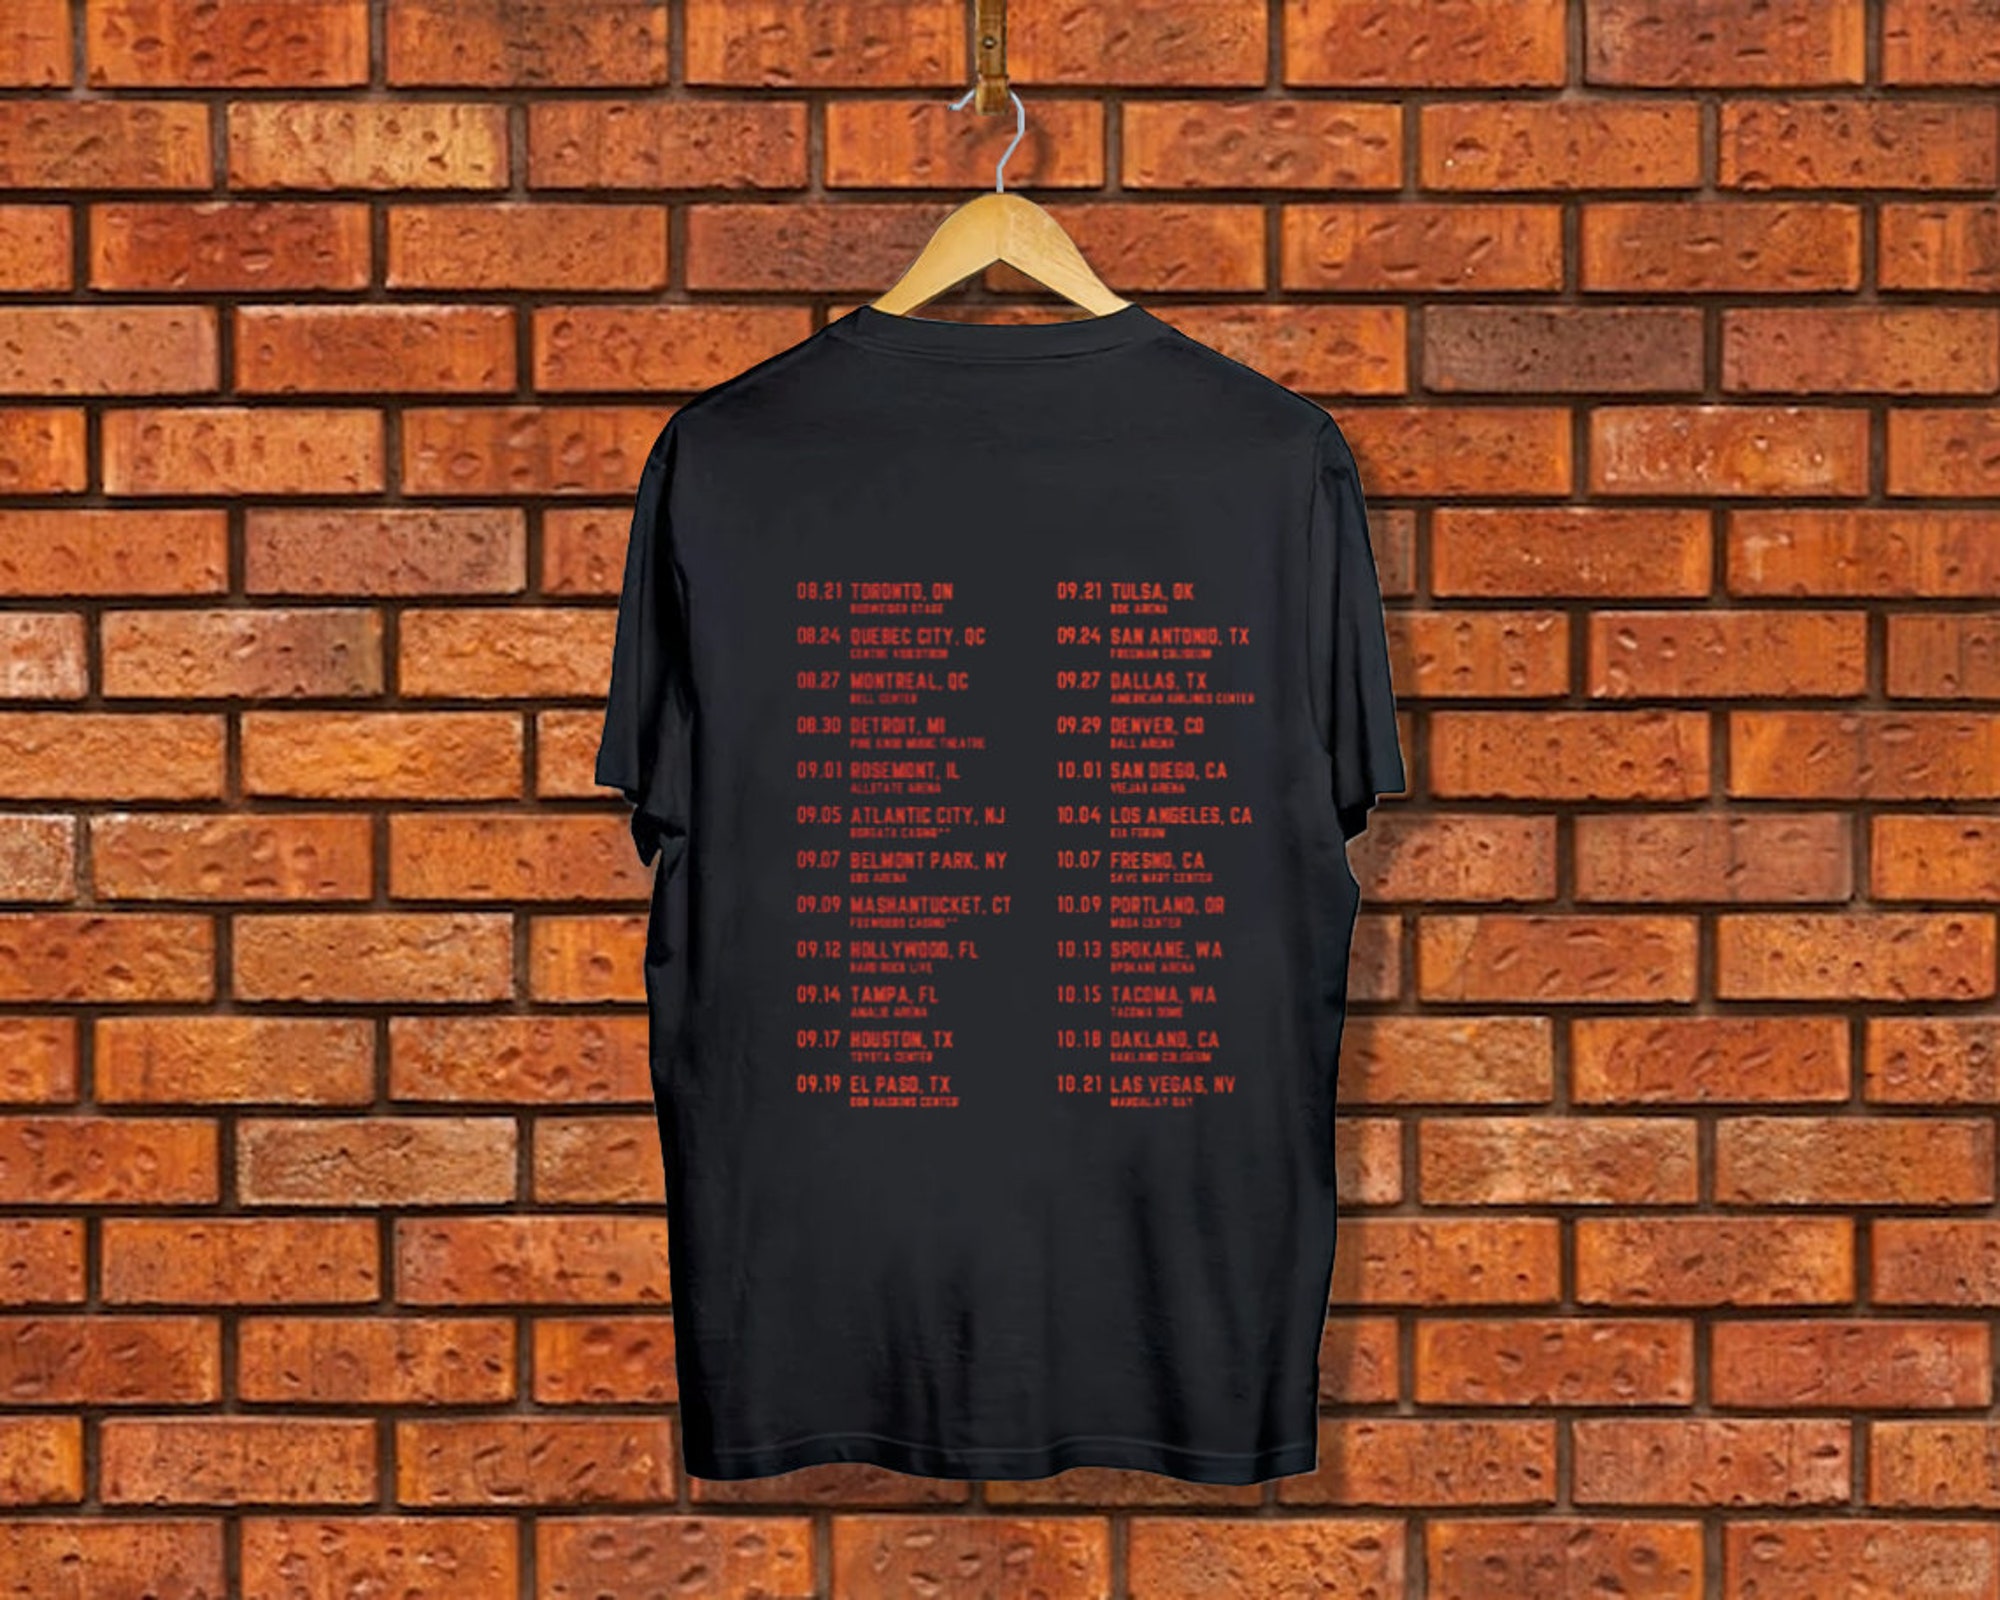 Scorpions Rock Believer World Tour 2022 T-shirt